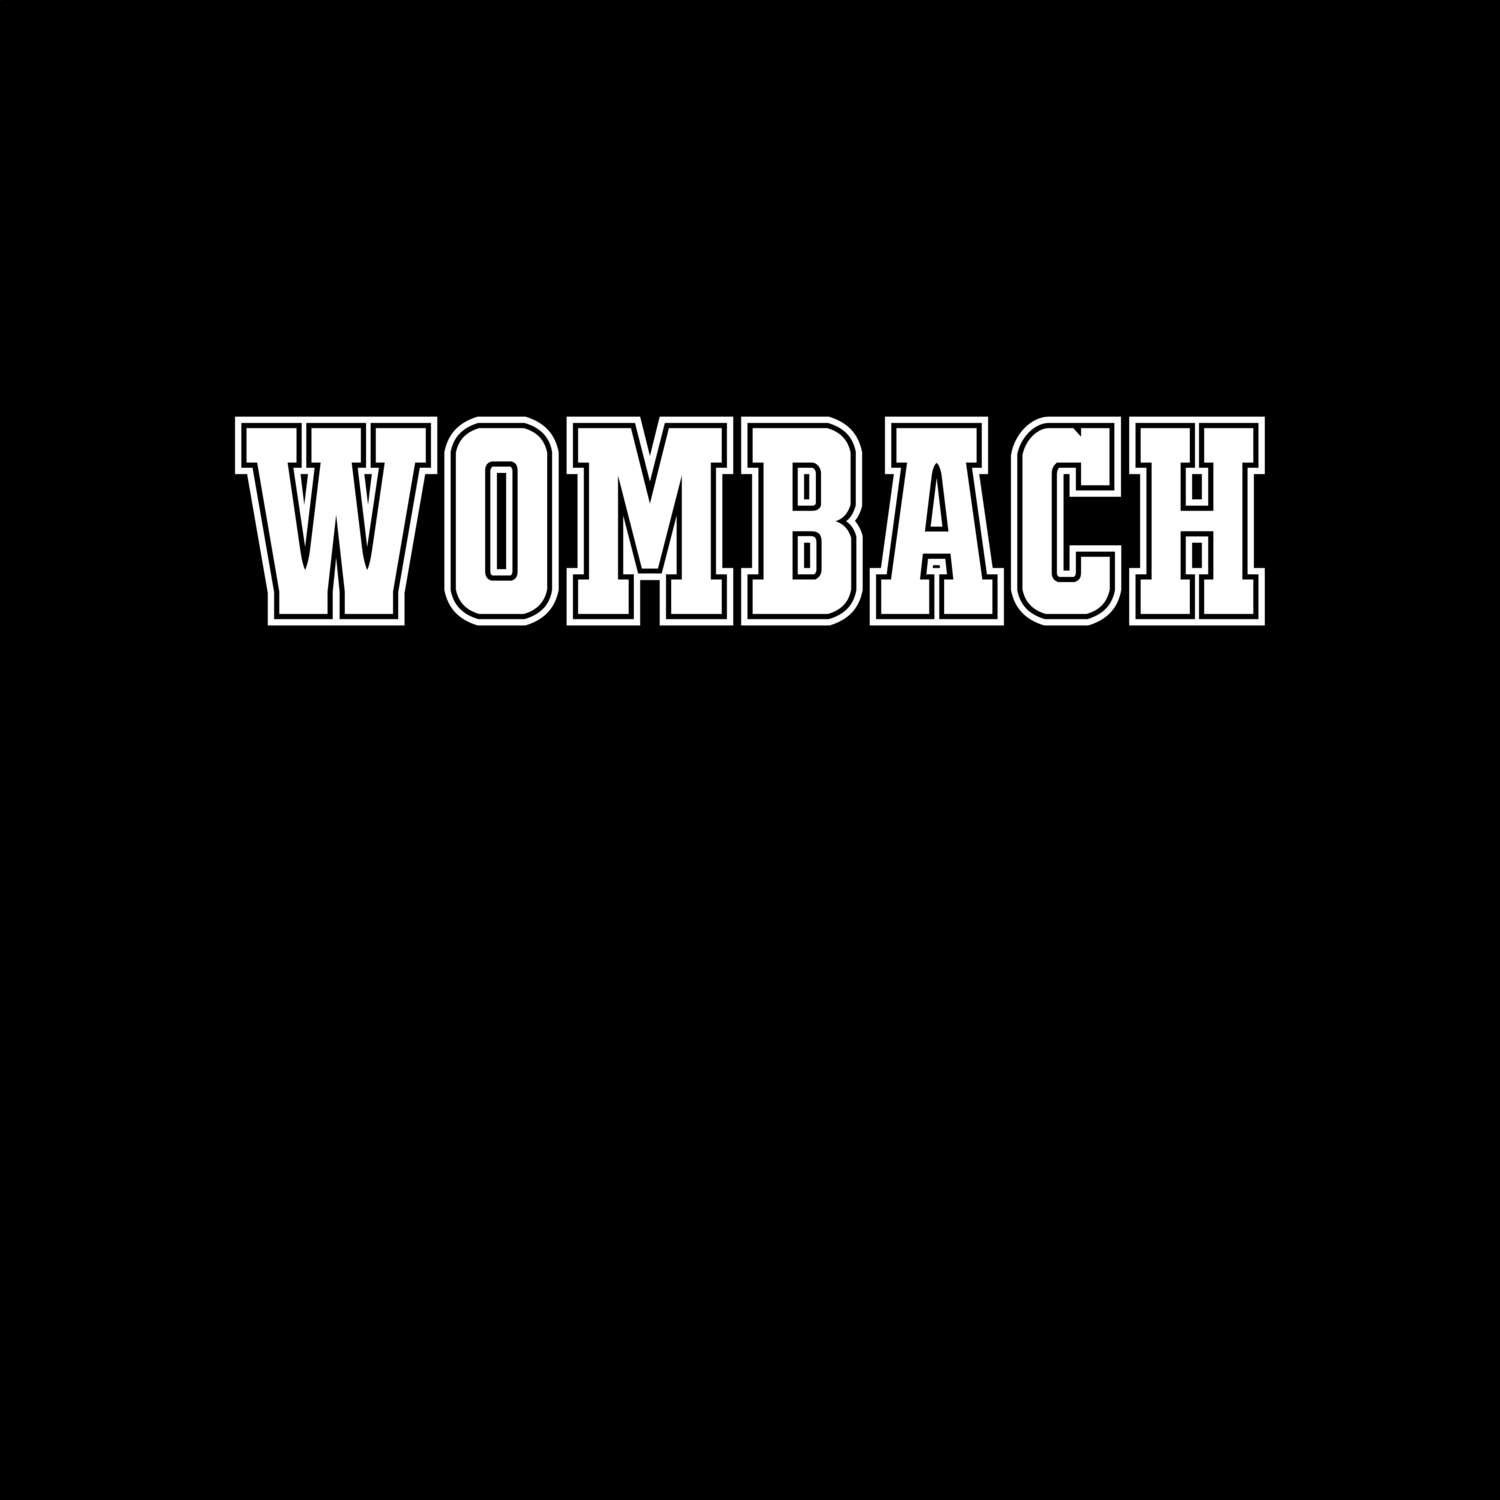 Wombach T-Shirt »Classic«